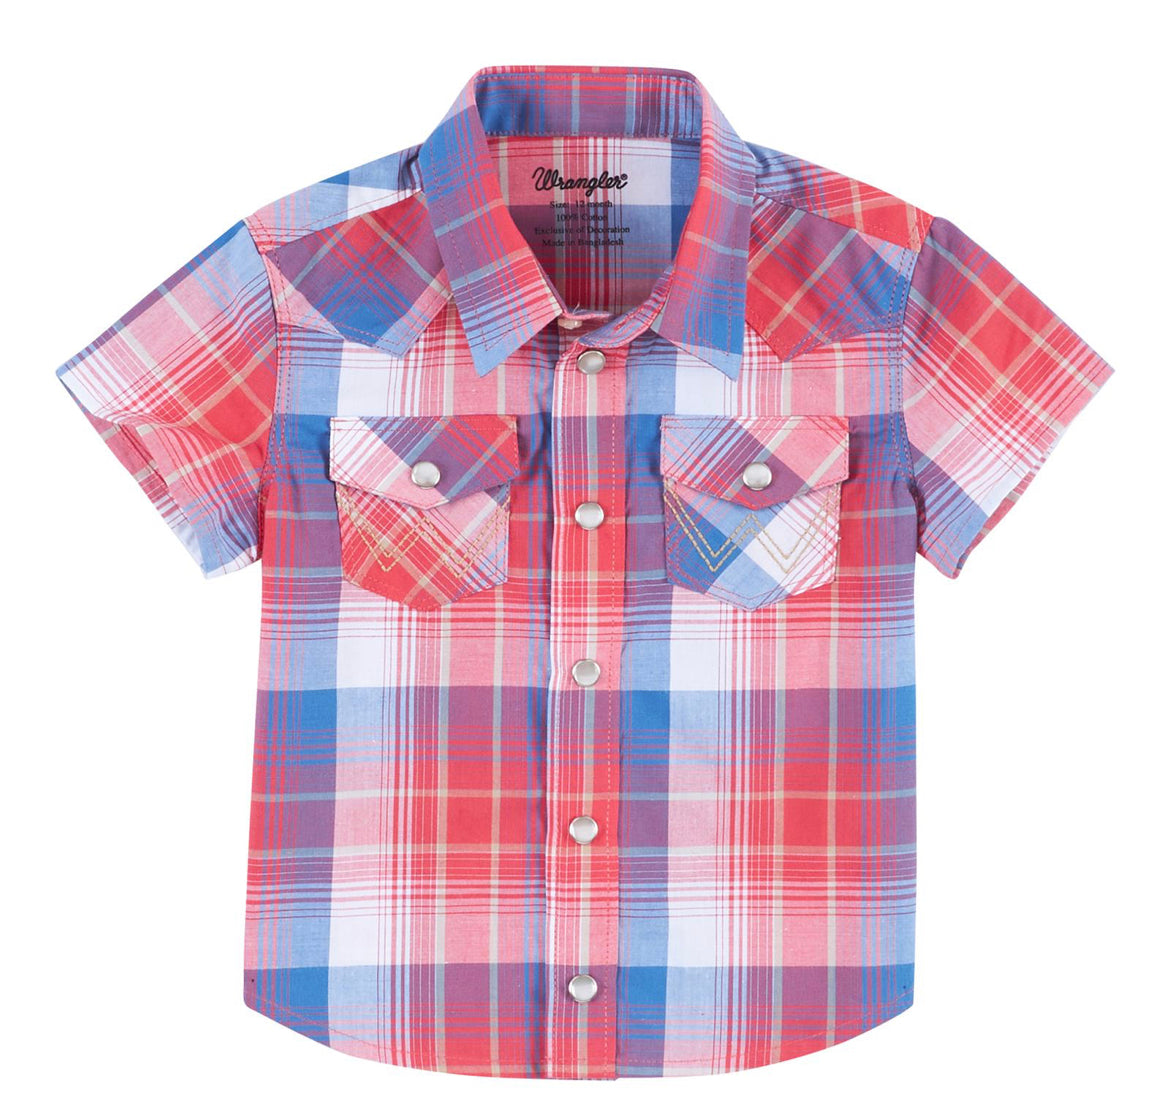 Wrangler® Baby Boy Woven Shirt - Plaid